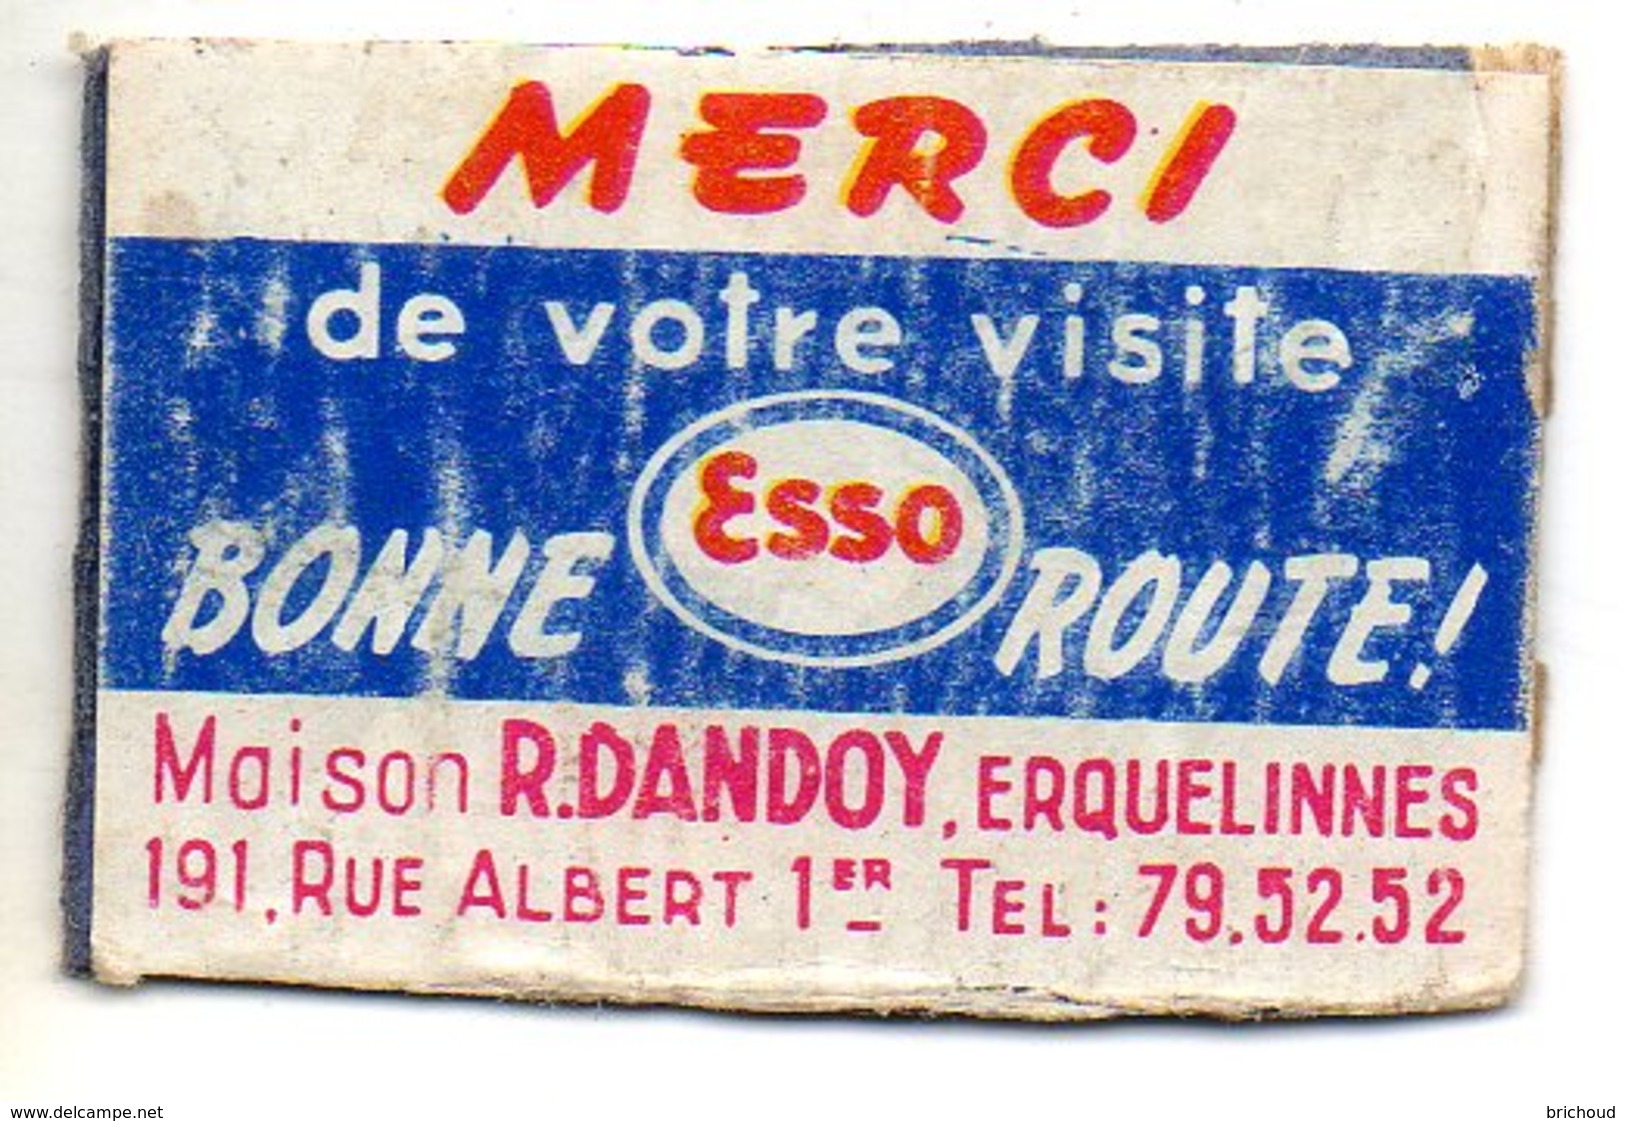 Esso Dandoy Erquelinnes - Matchbox Labels